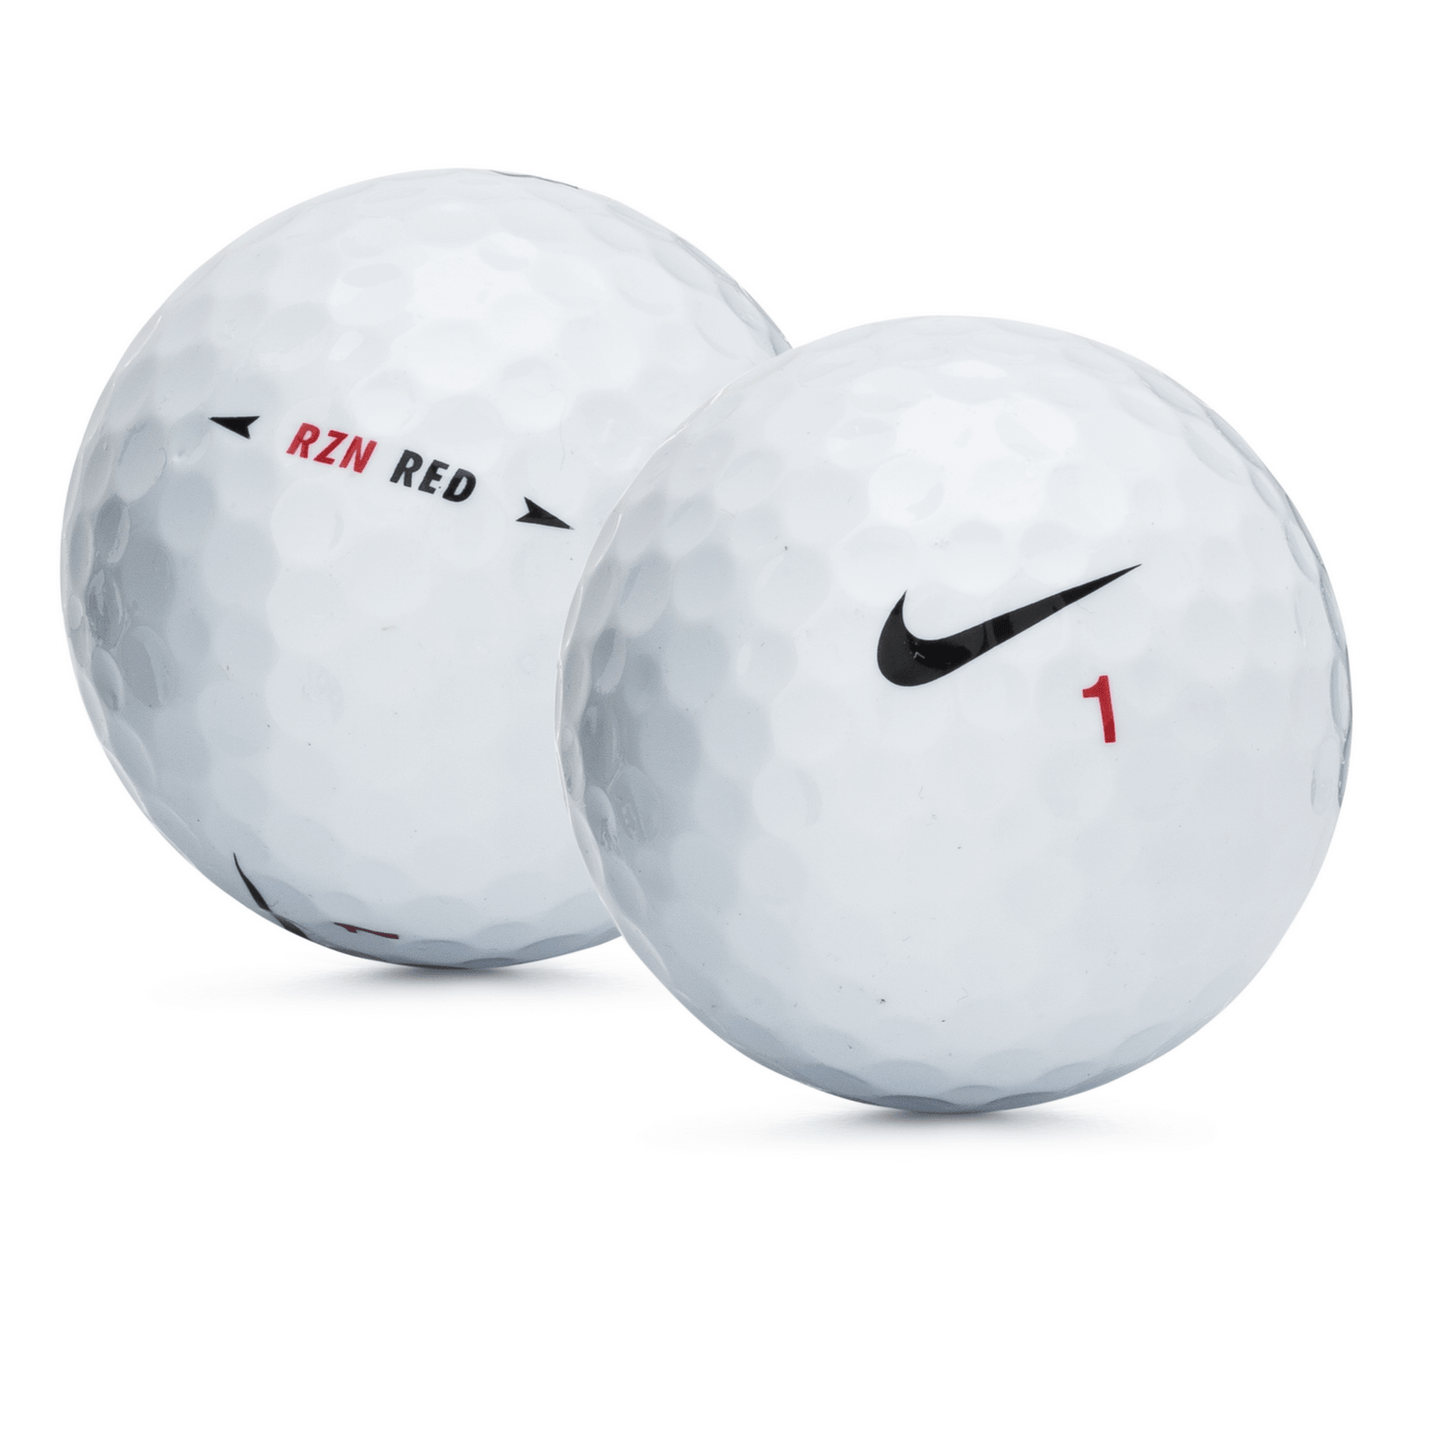 Used Nike RZN Red Golf Balls - 1 Dozen